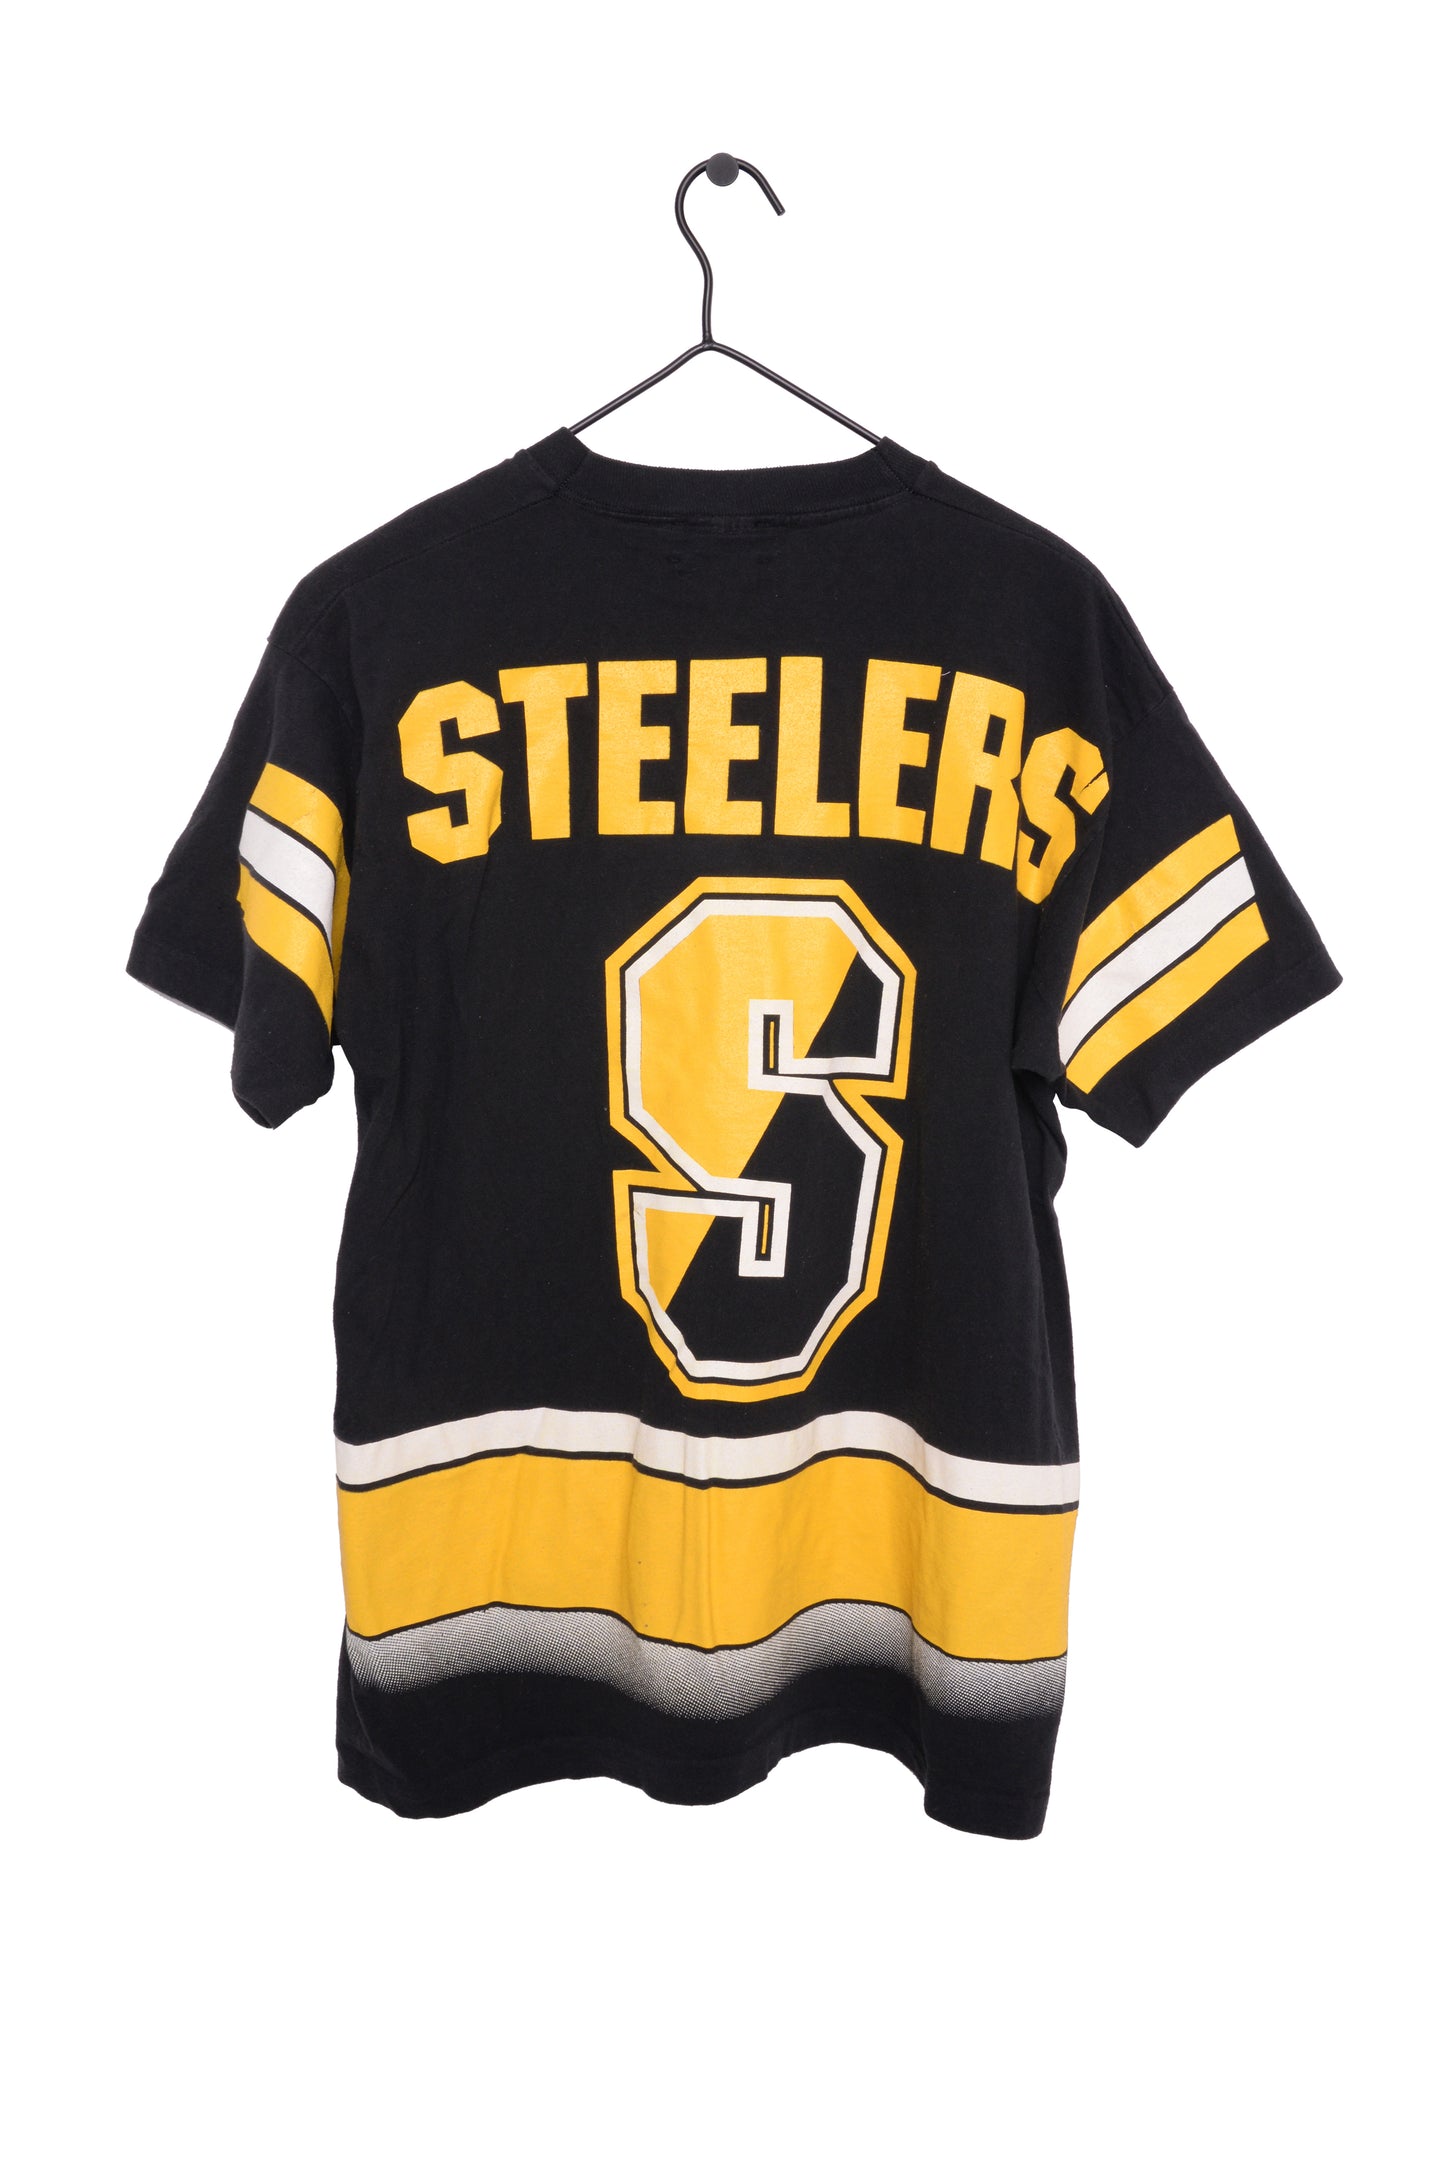 1994 Pittsburgh Steelers Tee USA